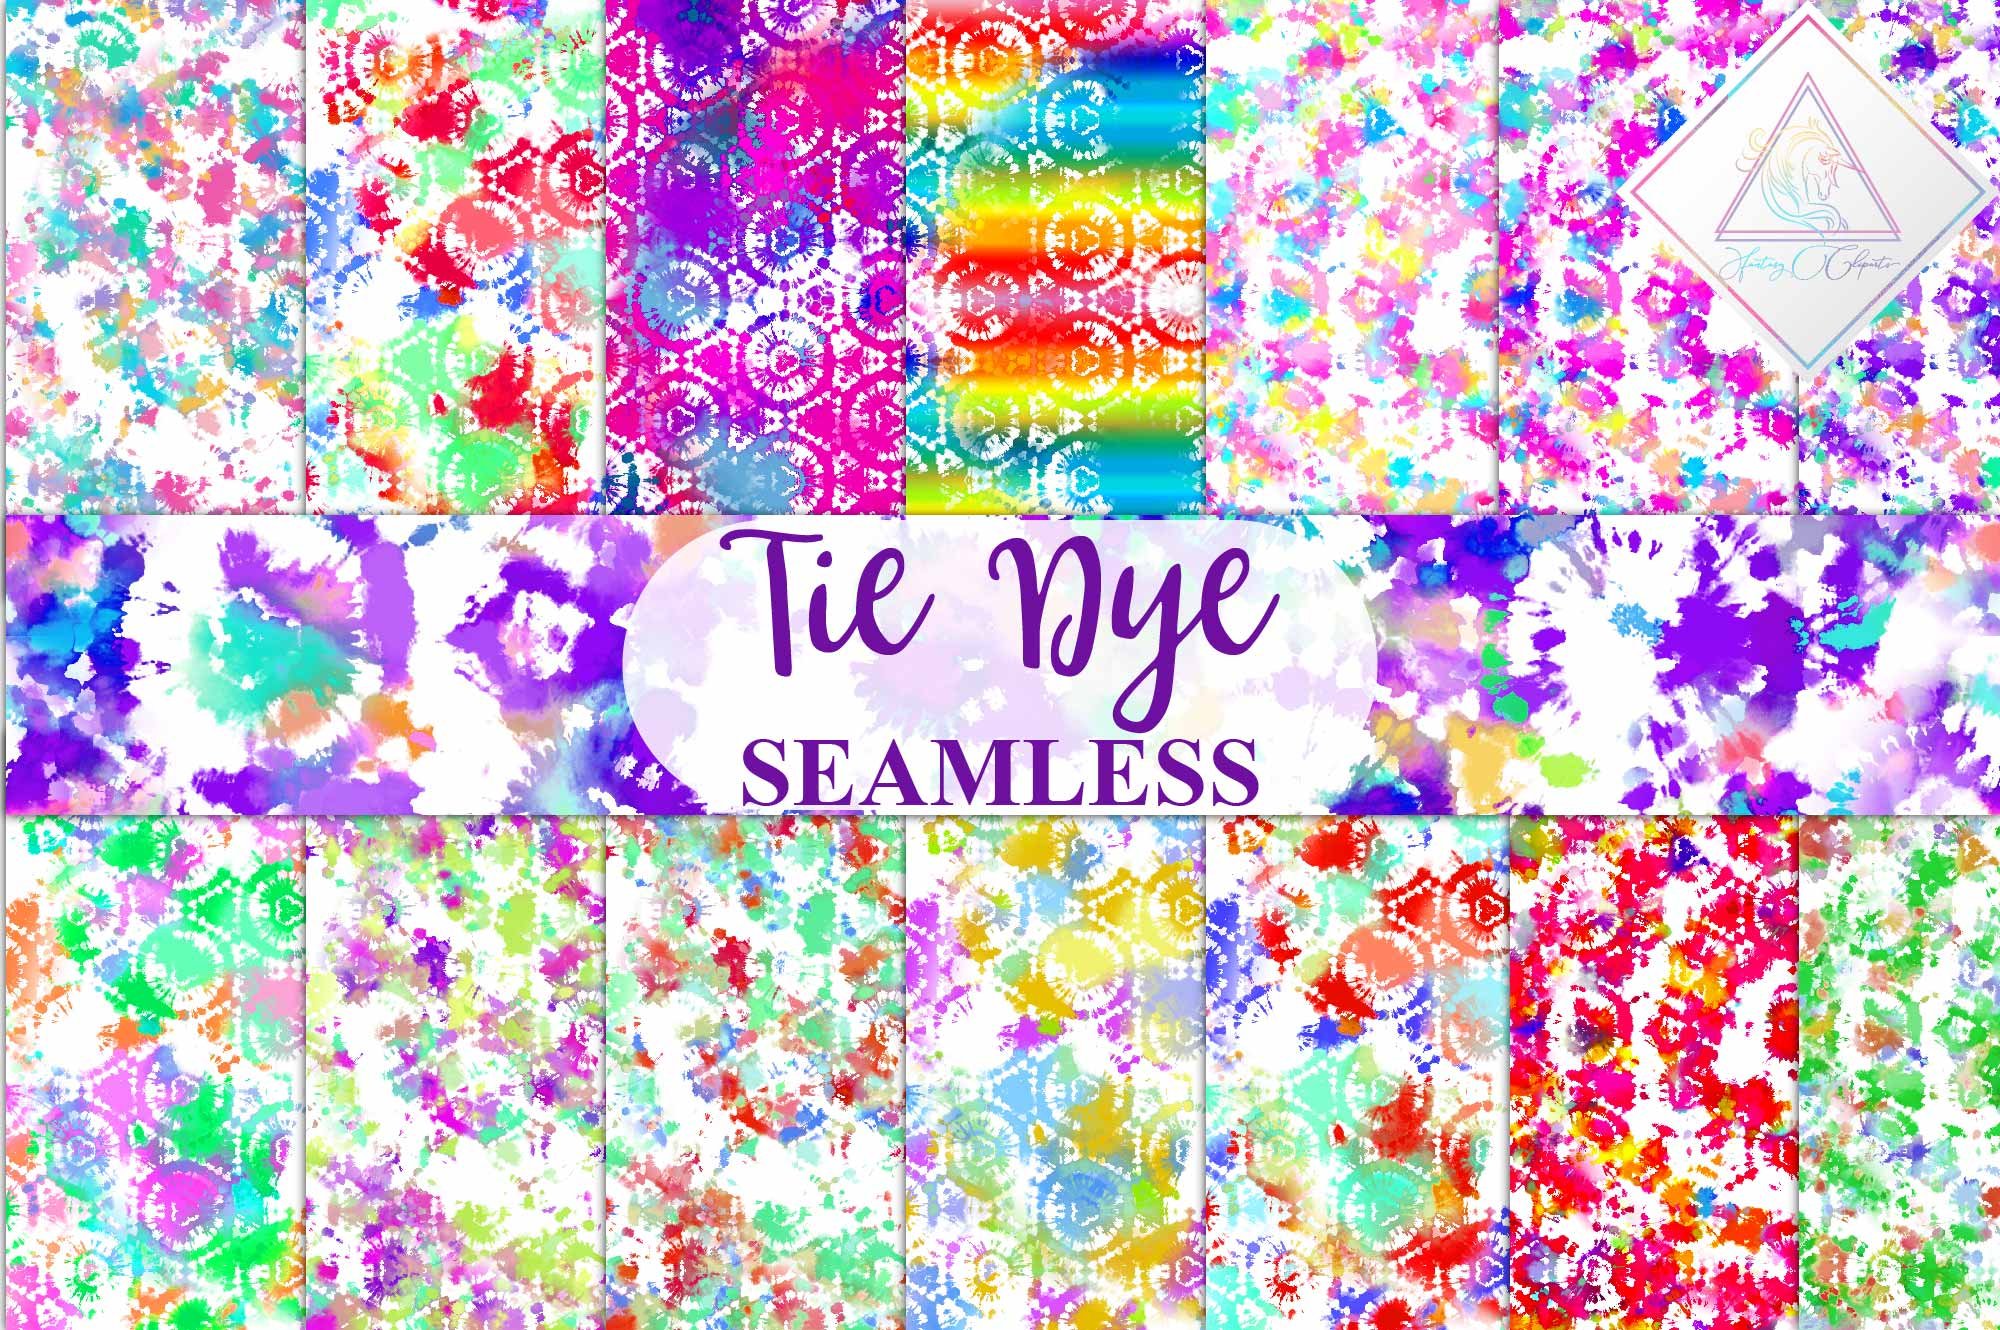 Tie Dye Digital Paper cover image.